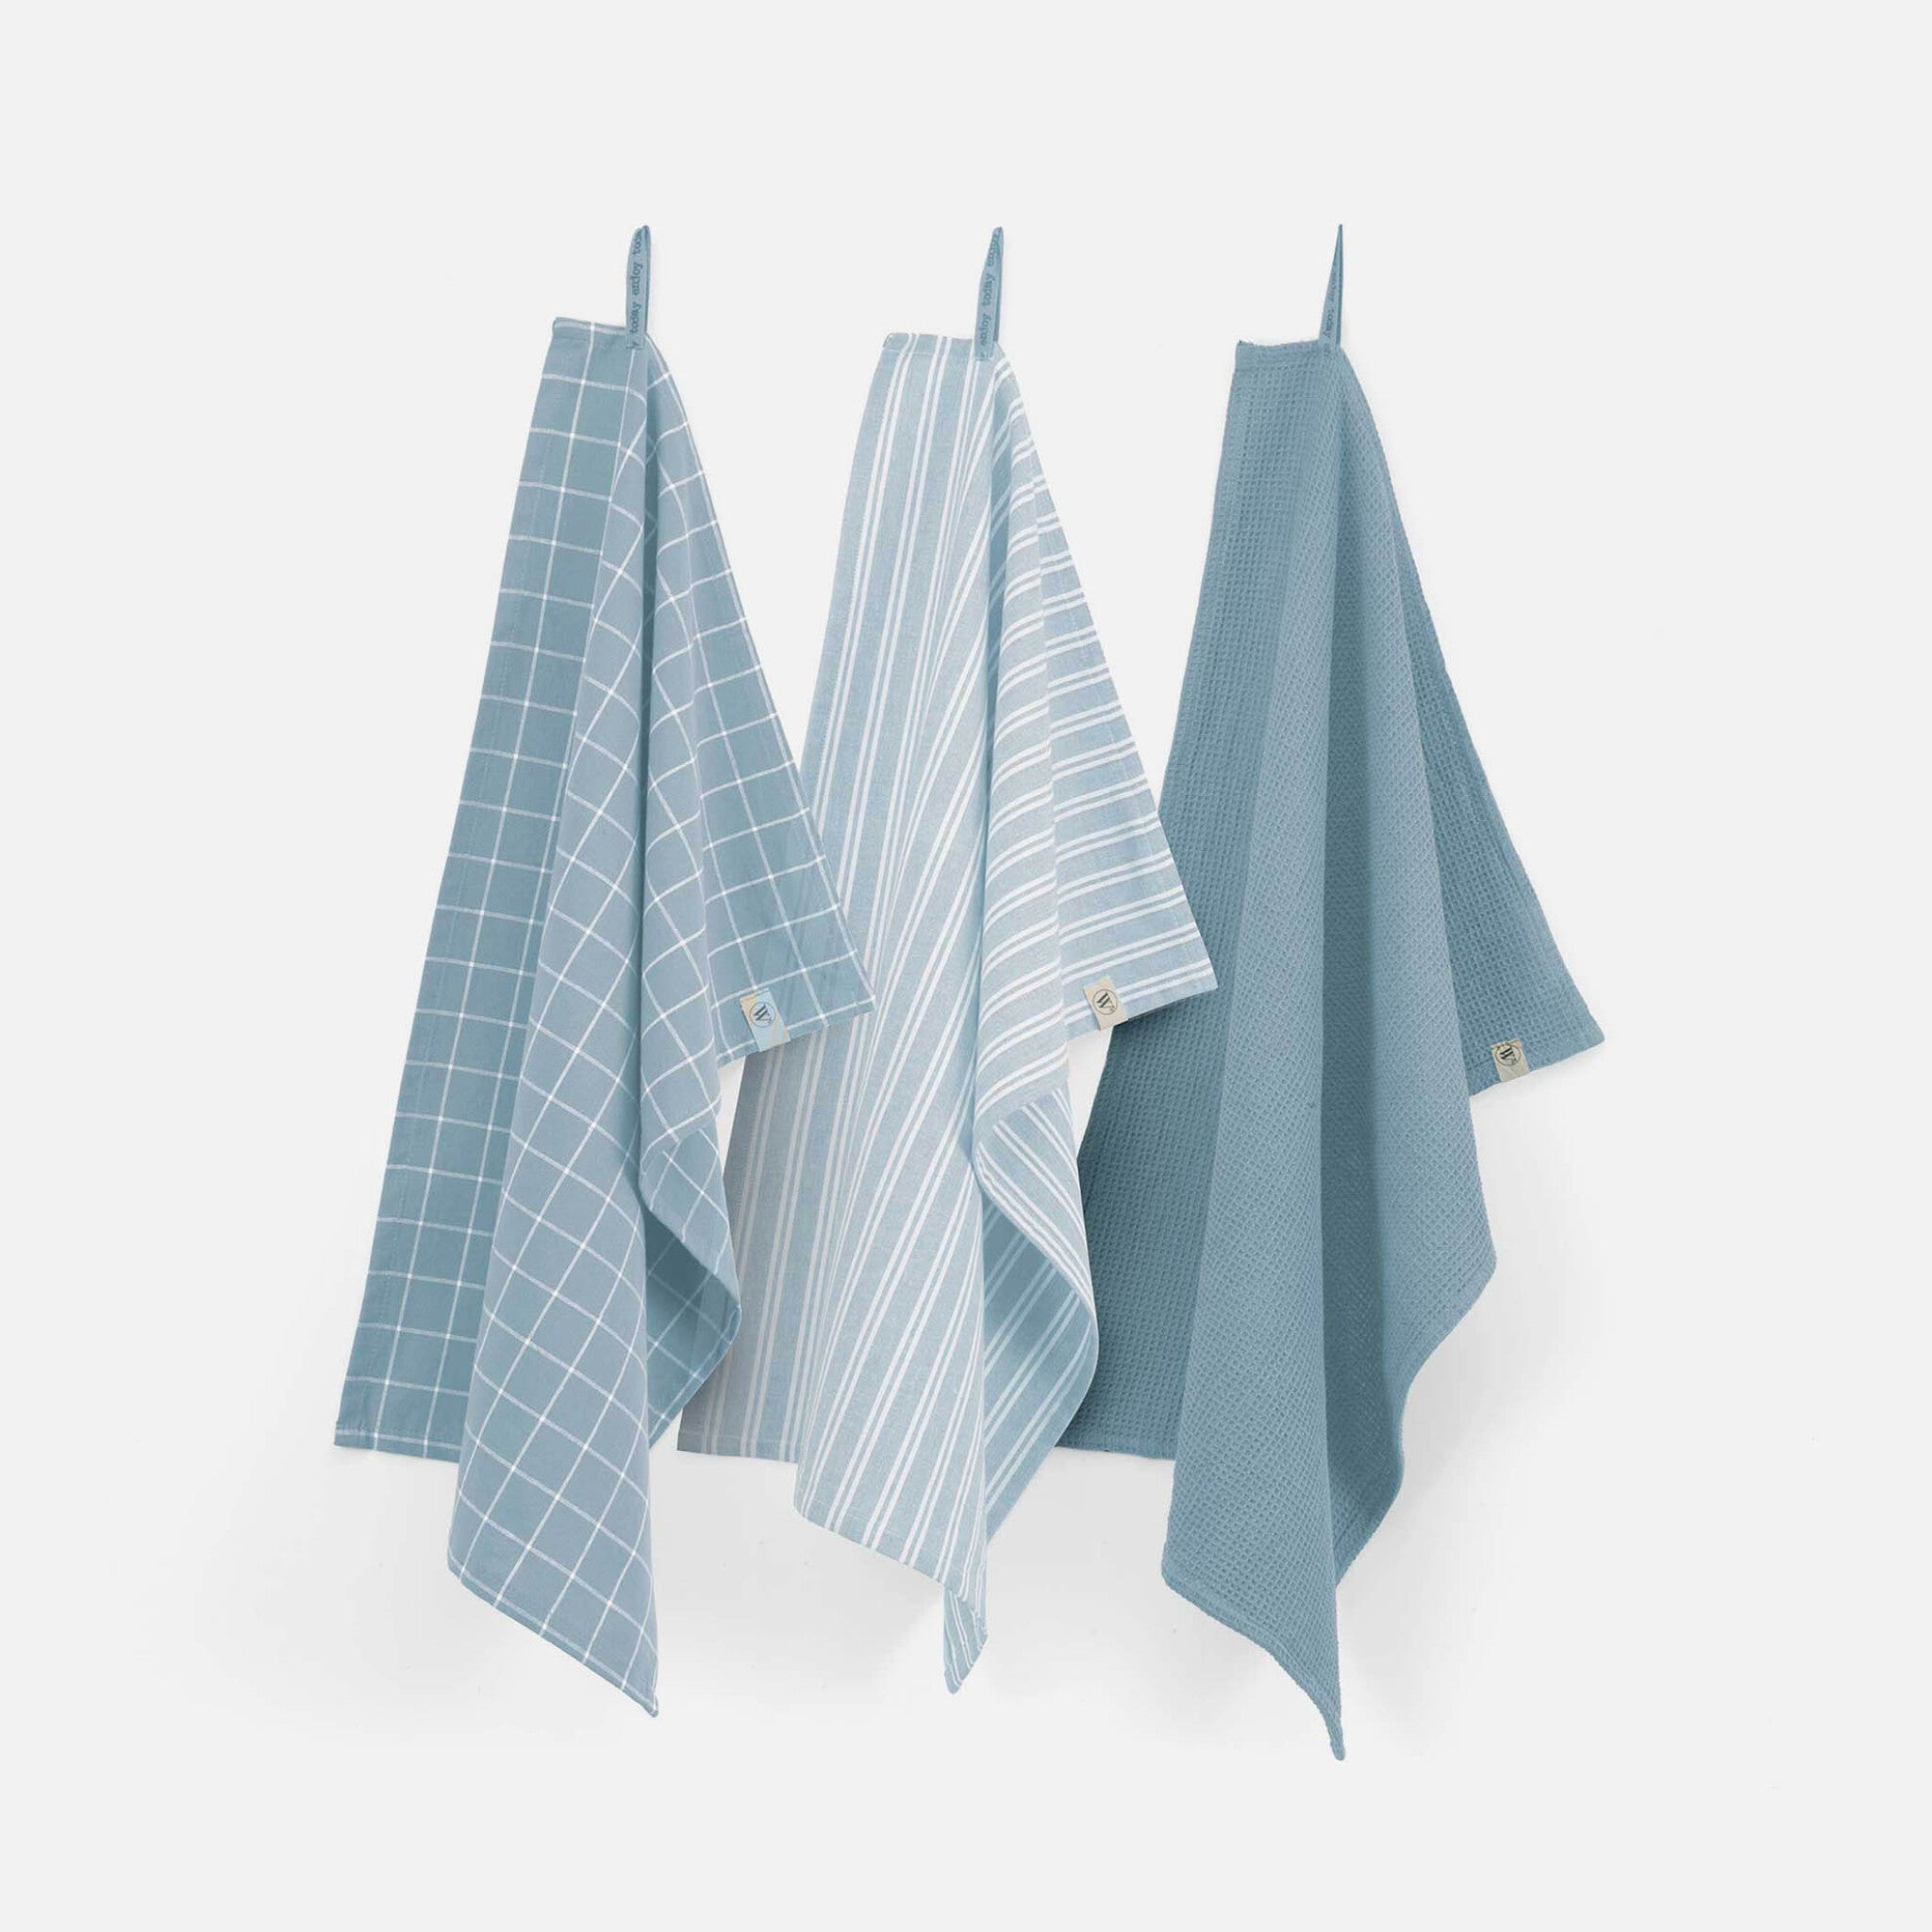 Keukenset Dry w. Cubes Uni, Stripes & Blocks Jeans Blauw 3x 50x70